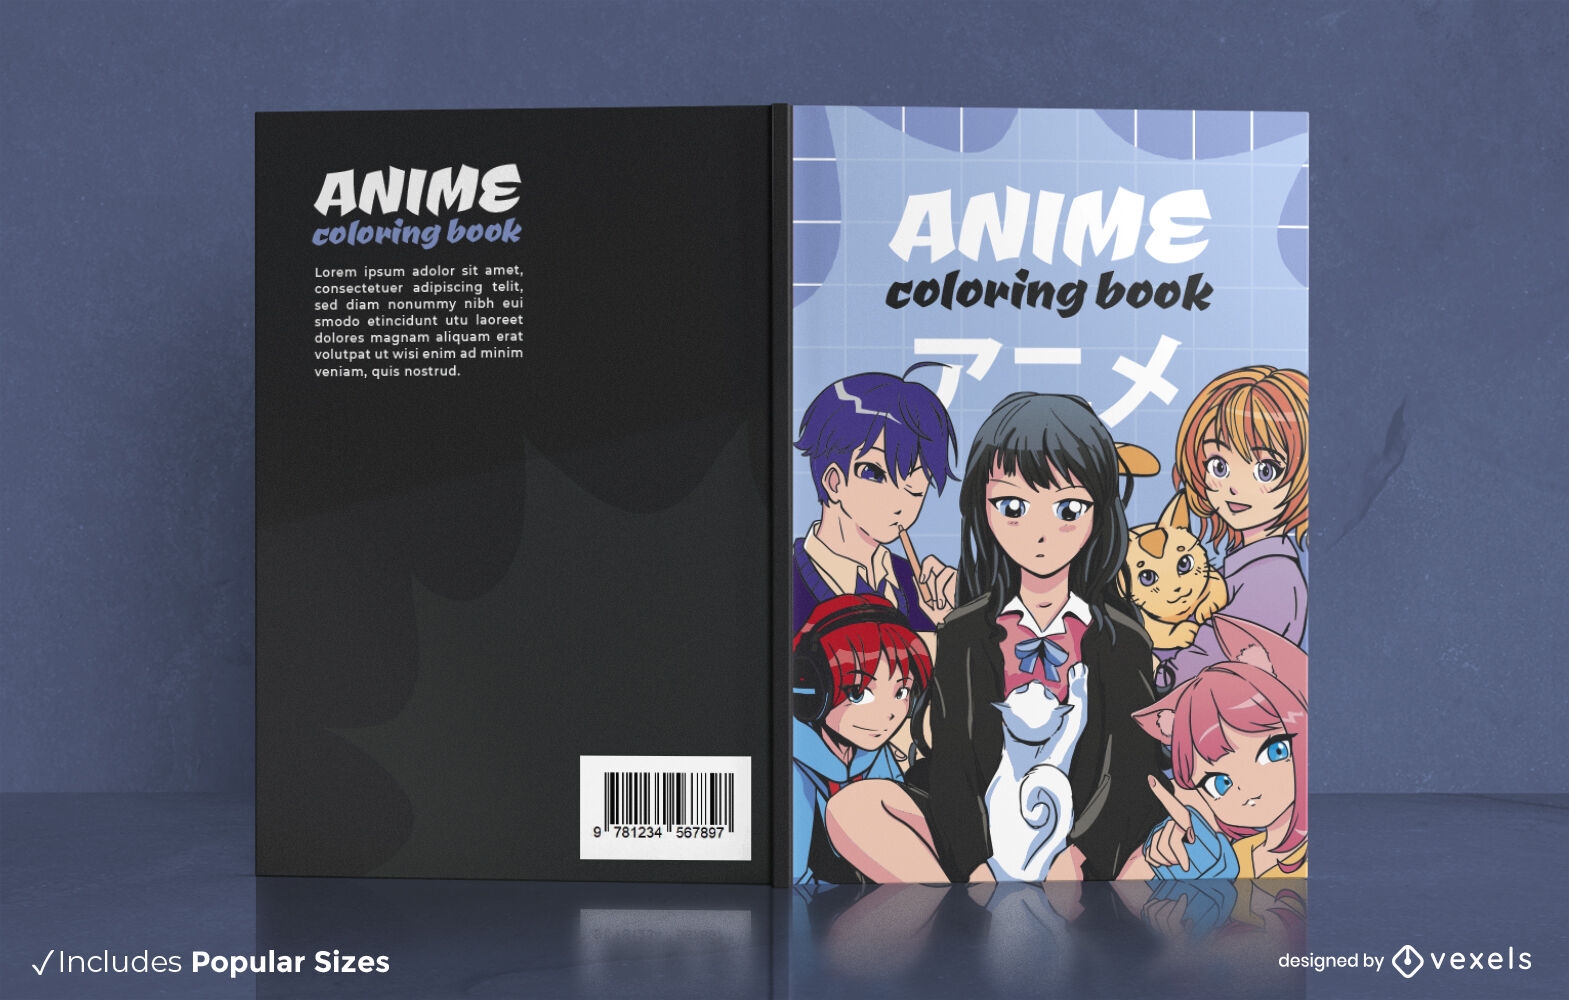 Anime coloring book cover design